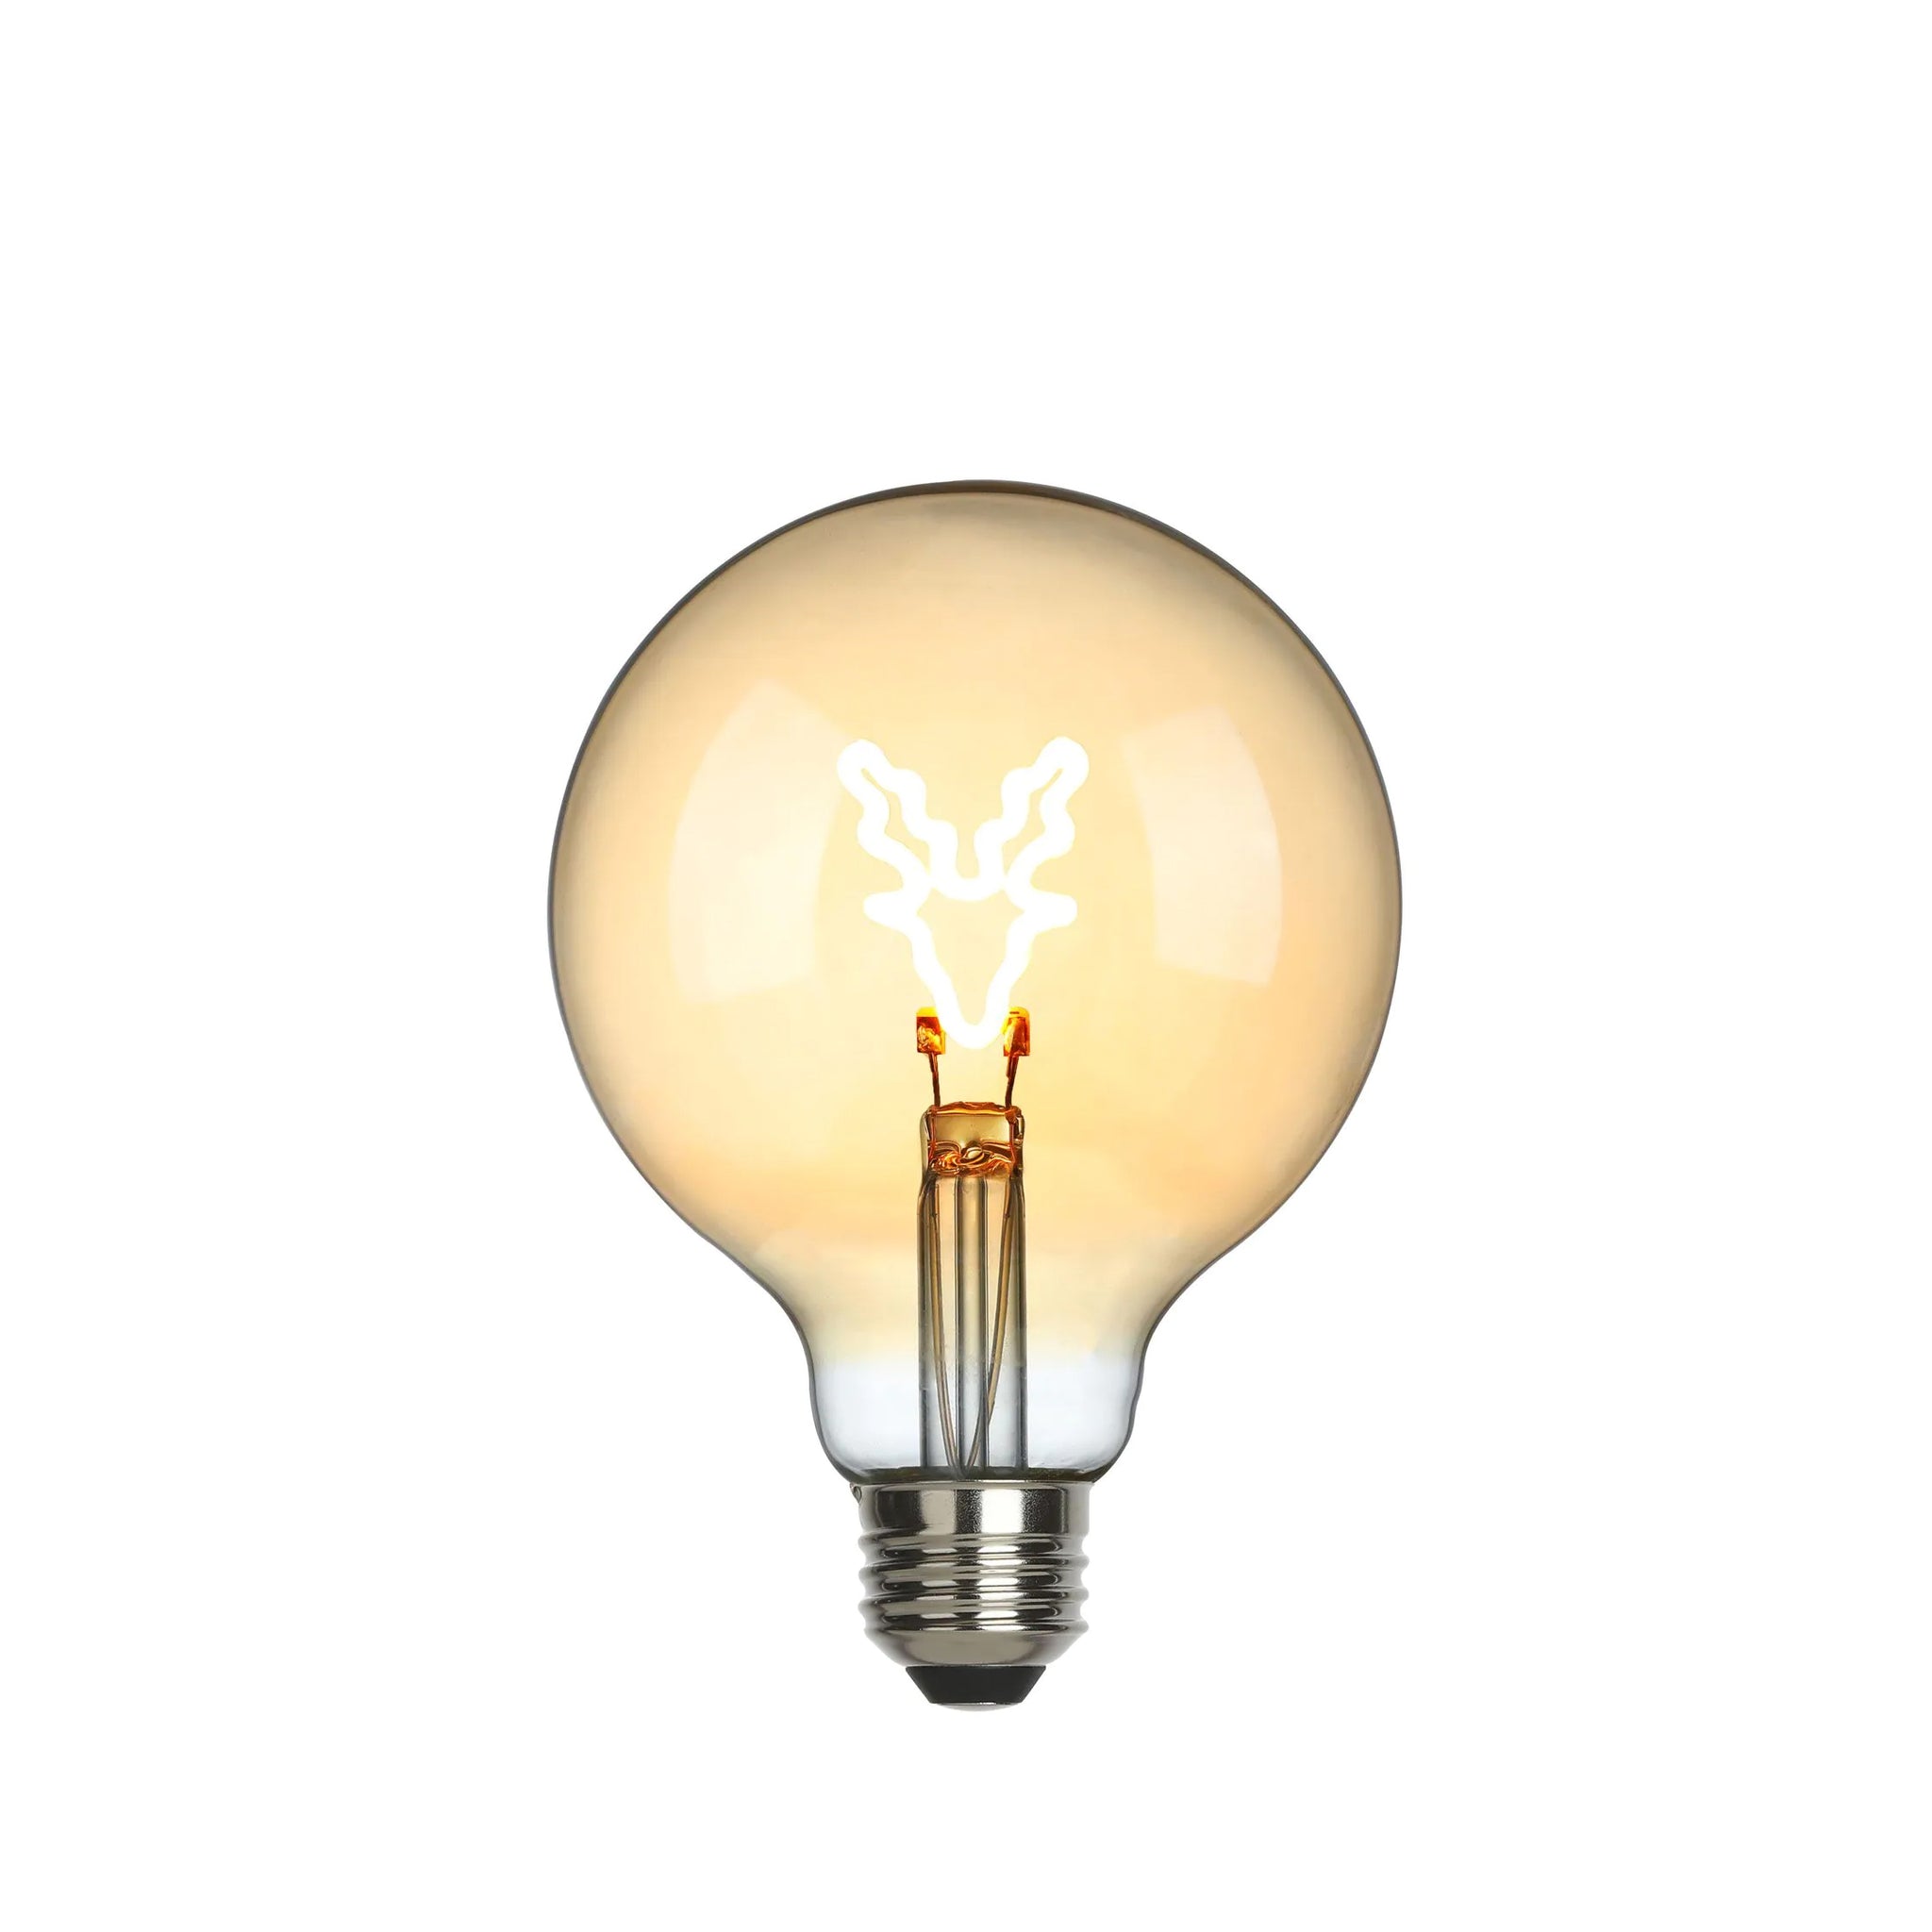 Sompex LED Filament lamp Small Deer│Lamp met hert│voorkant met witte achtergrond│art. 625102